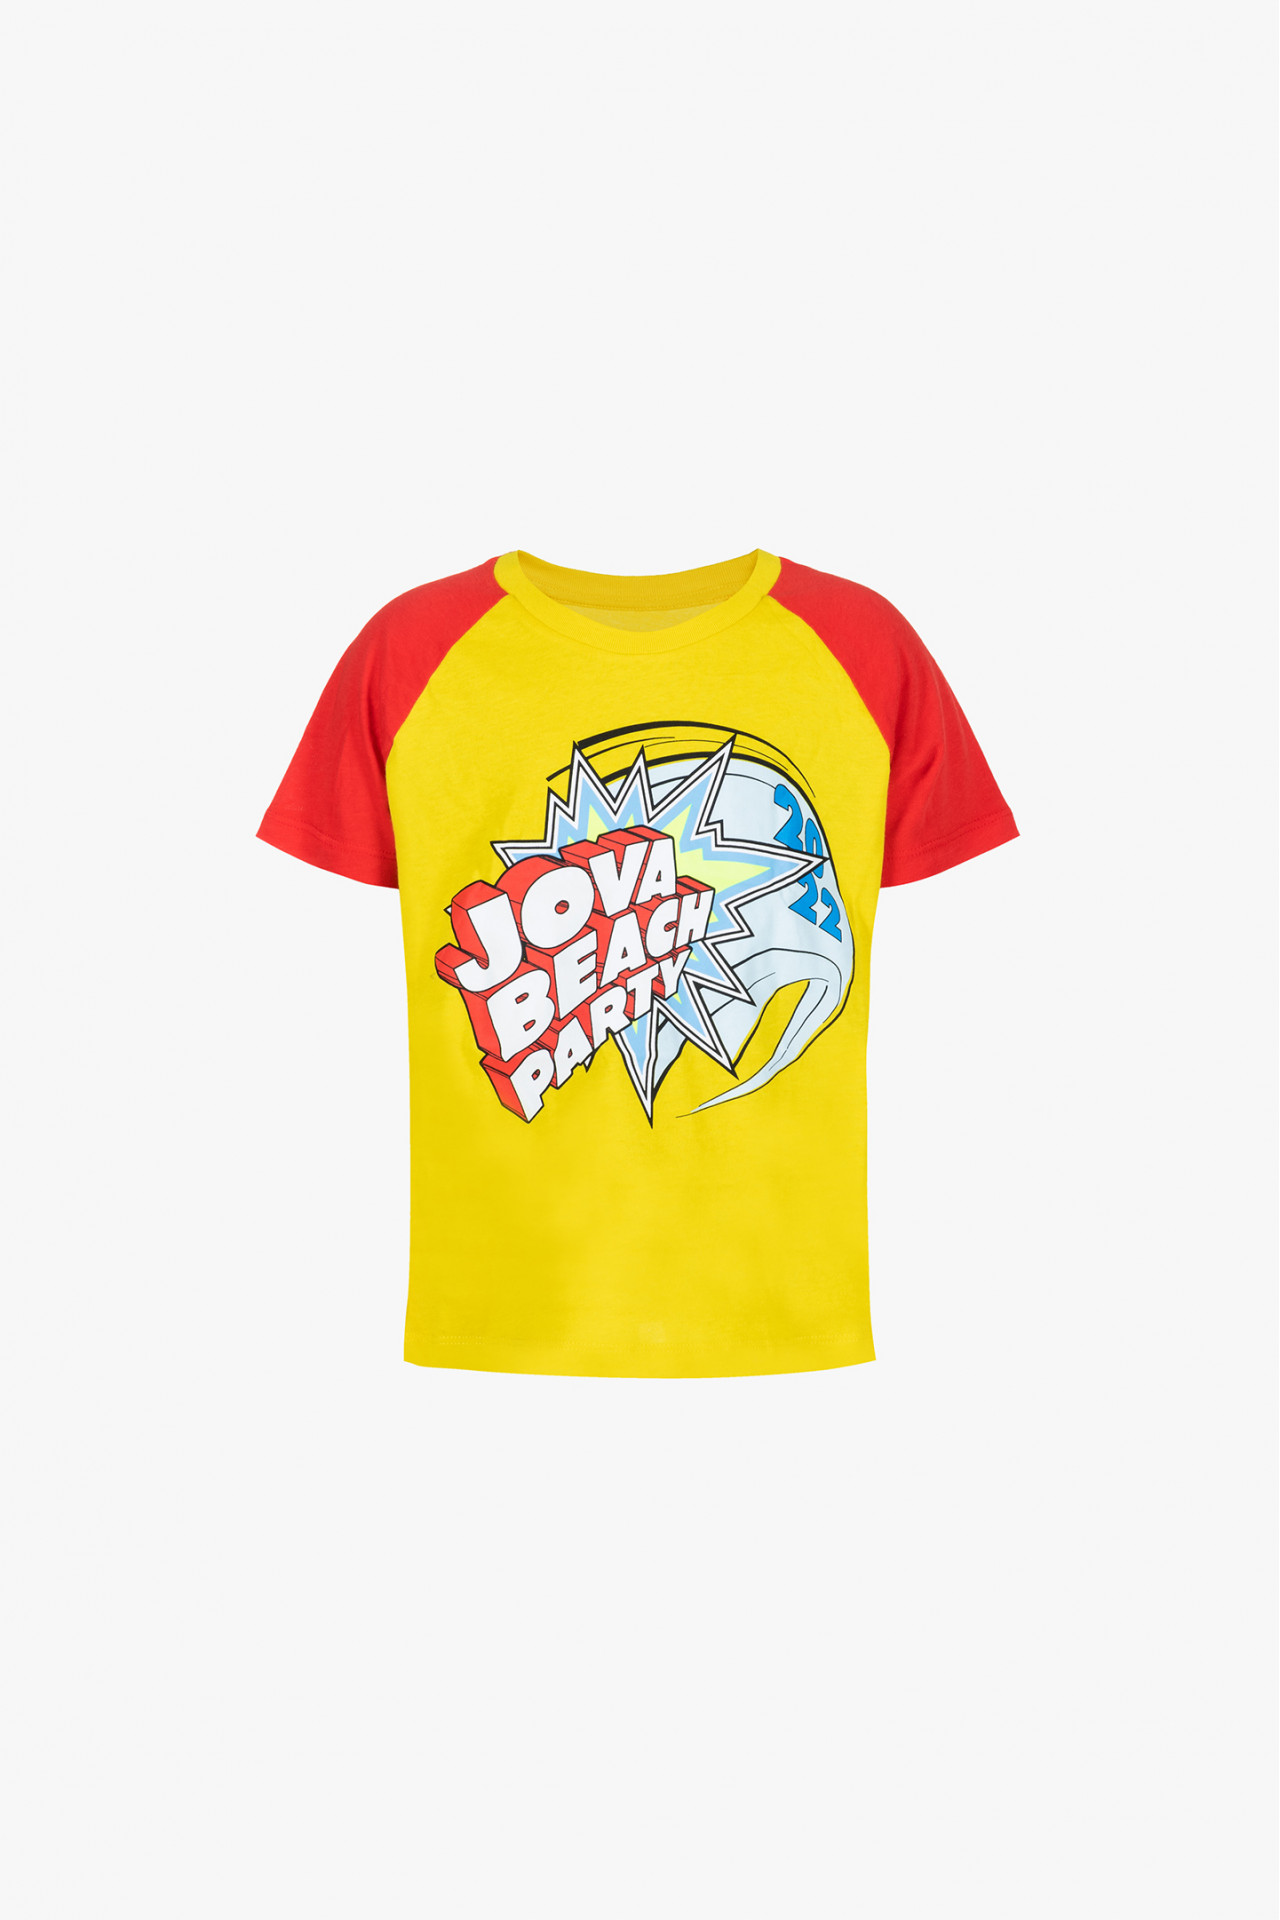 "Boom" Jova Beach Party Kid T-Shirt